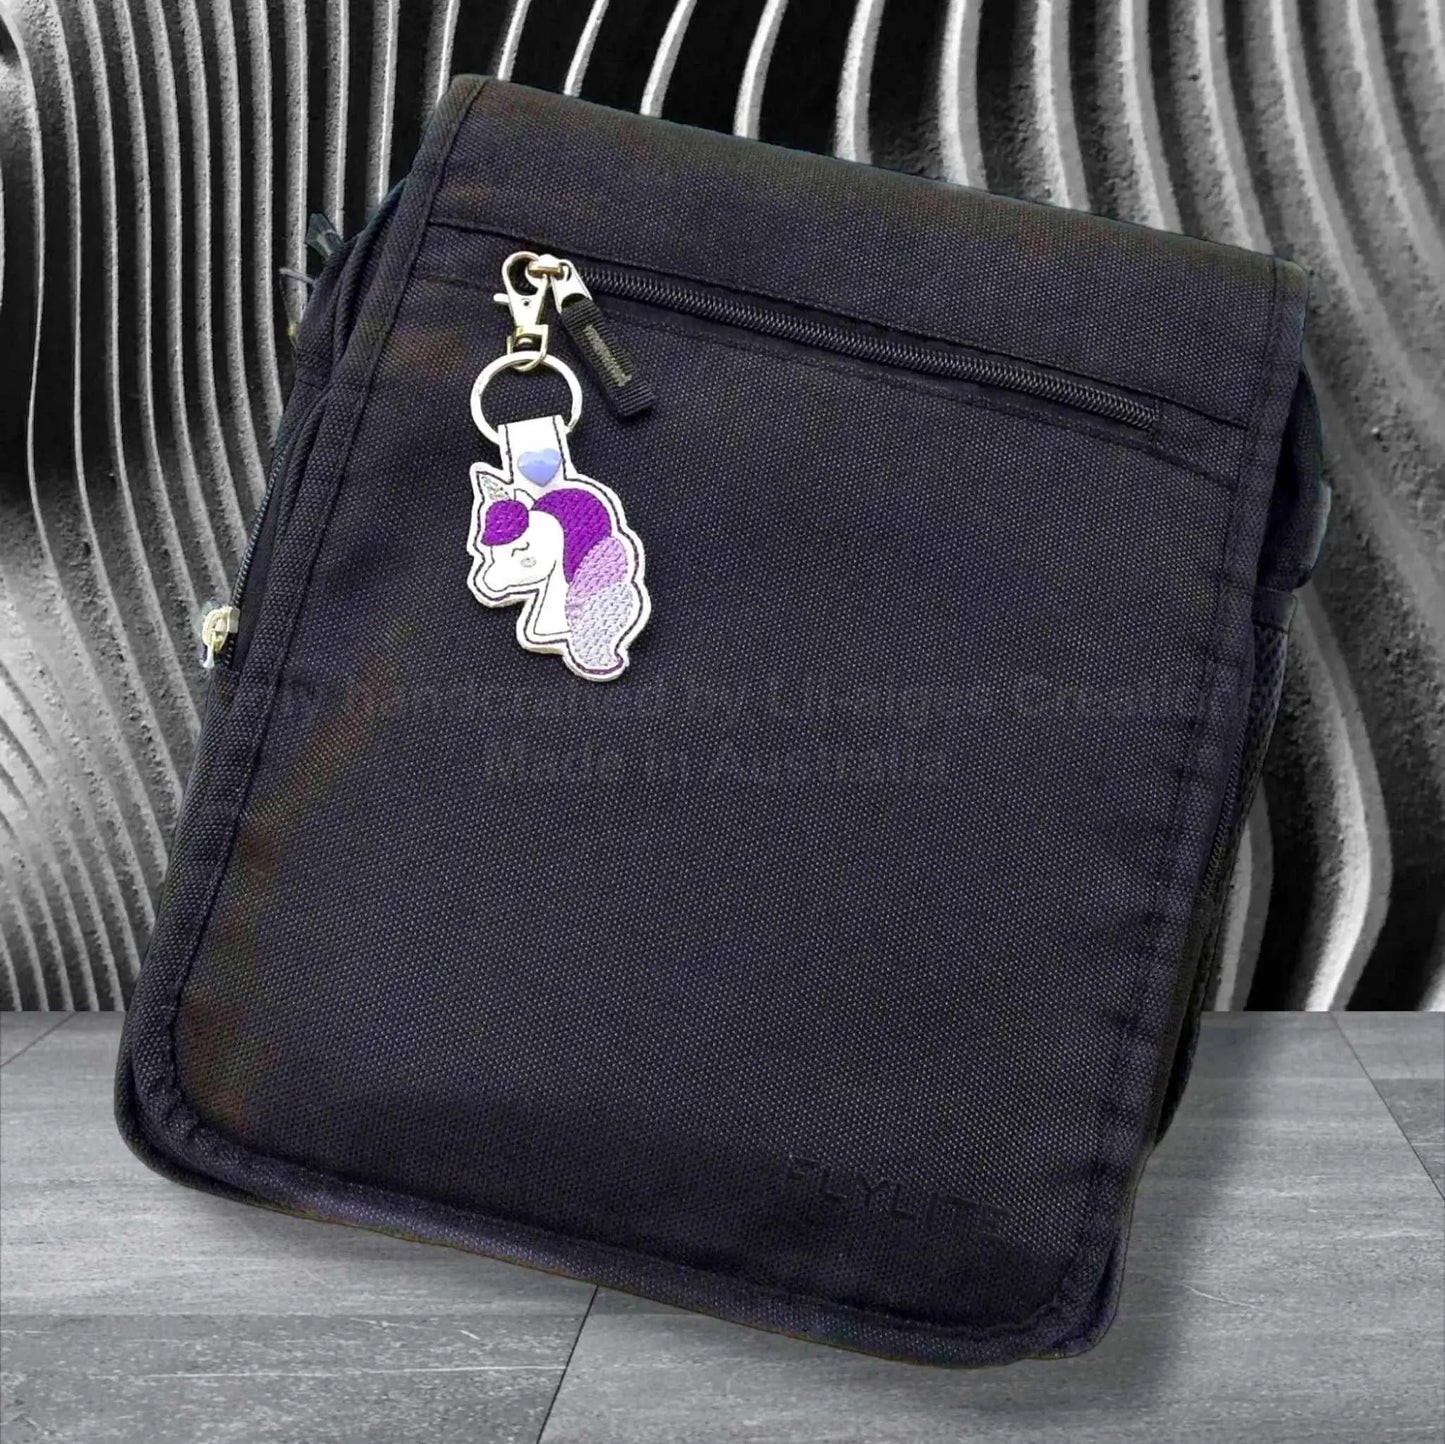 Magical Unicorn Key Chain, Key Fob, Bag Tag, Cute Gift Idea, Ready to Ship, made in Australia - Image #4